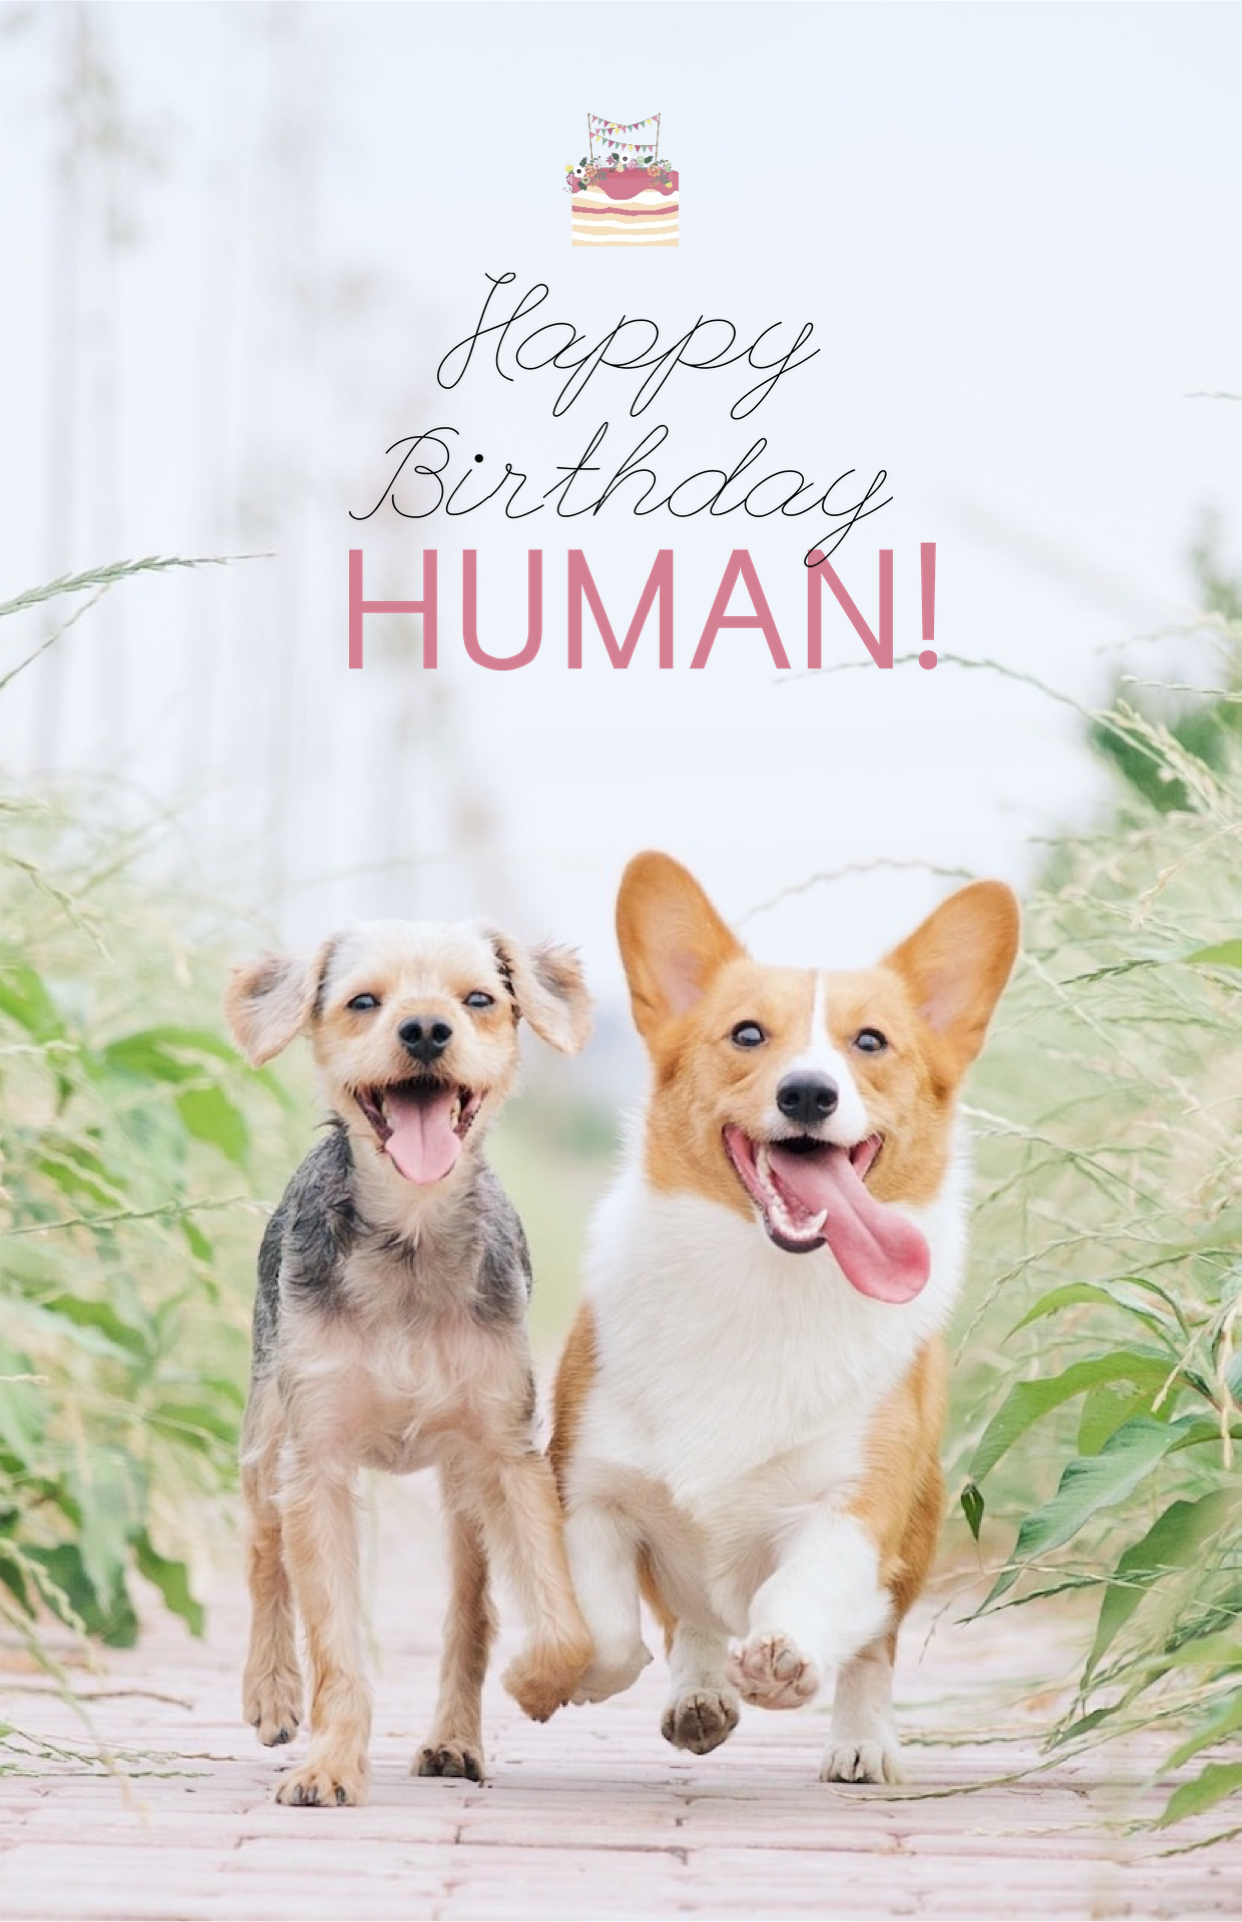 Bazaart - Cute Dogs Wishing Happy Birthday Human Birthday Template